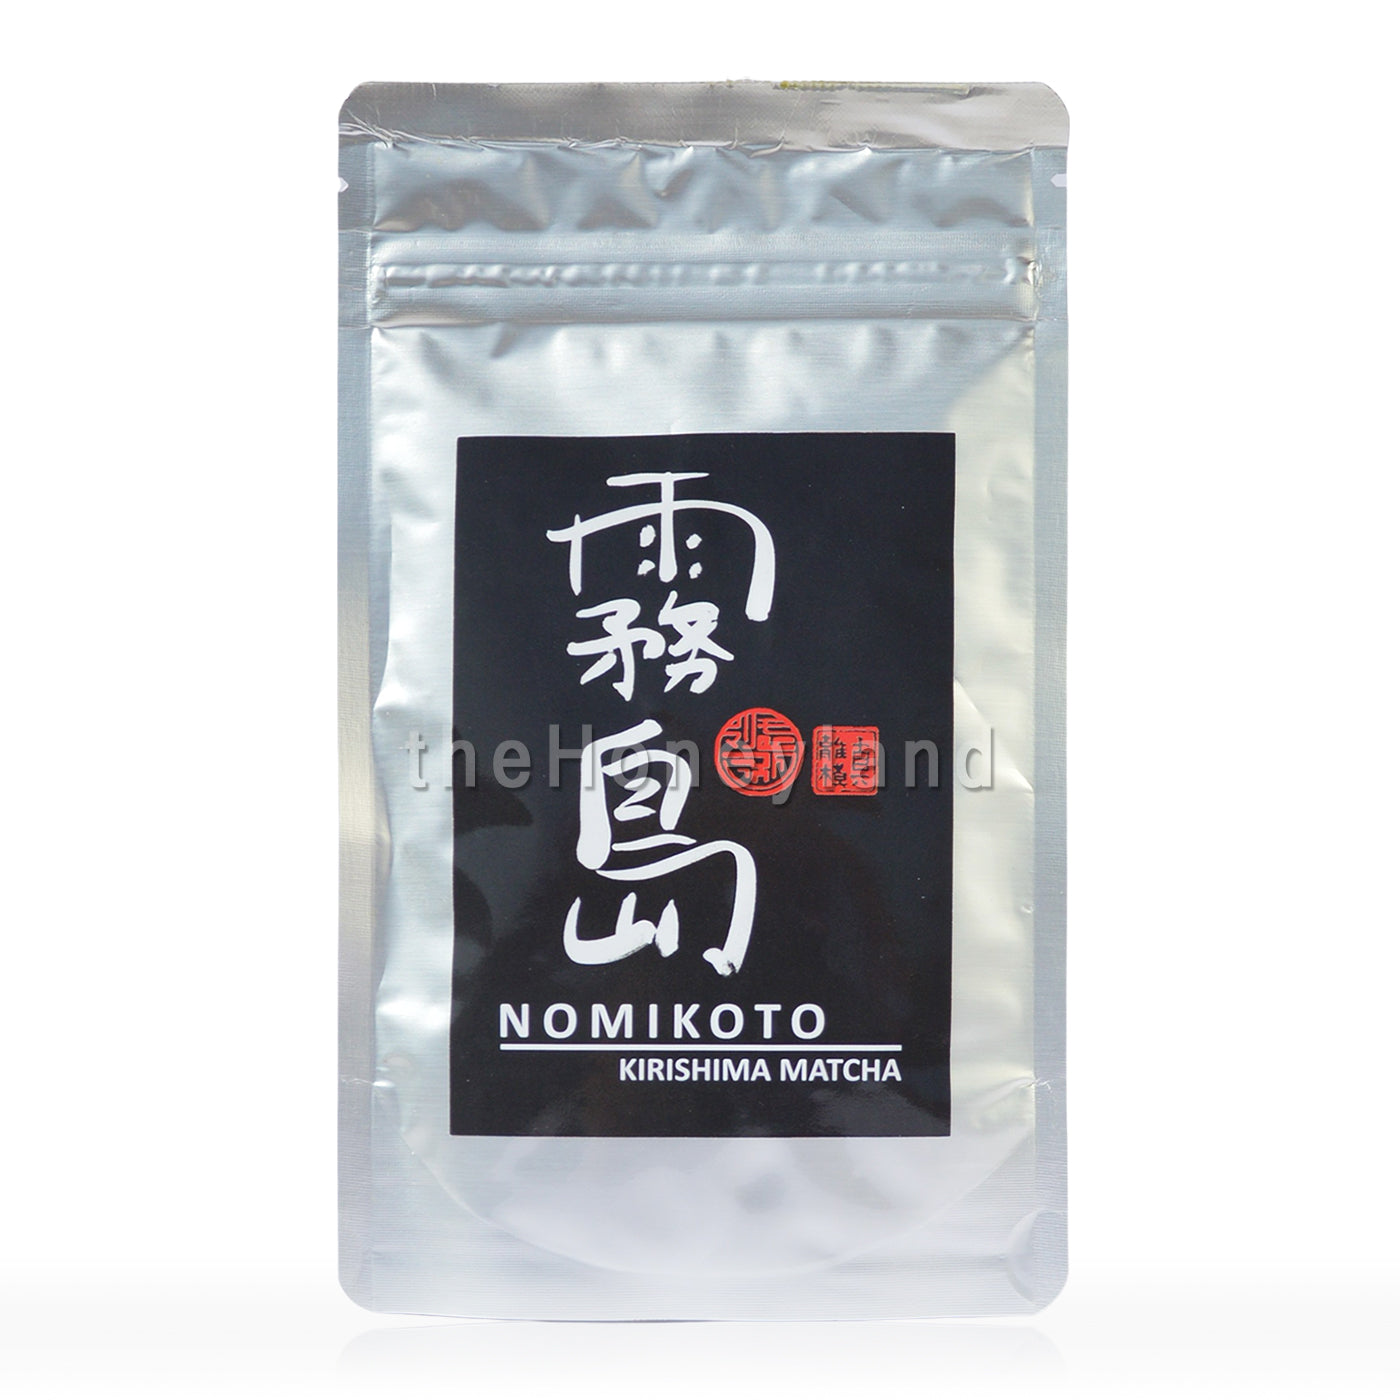 Premium Nomikoto organic matcha from the Kirishima Mountains